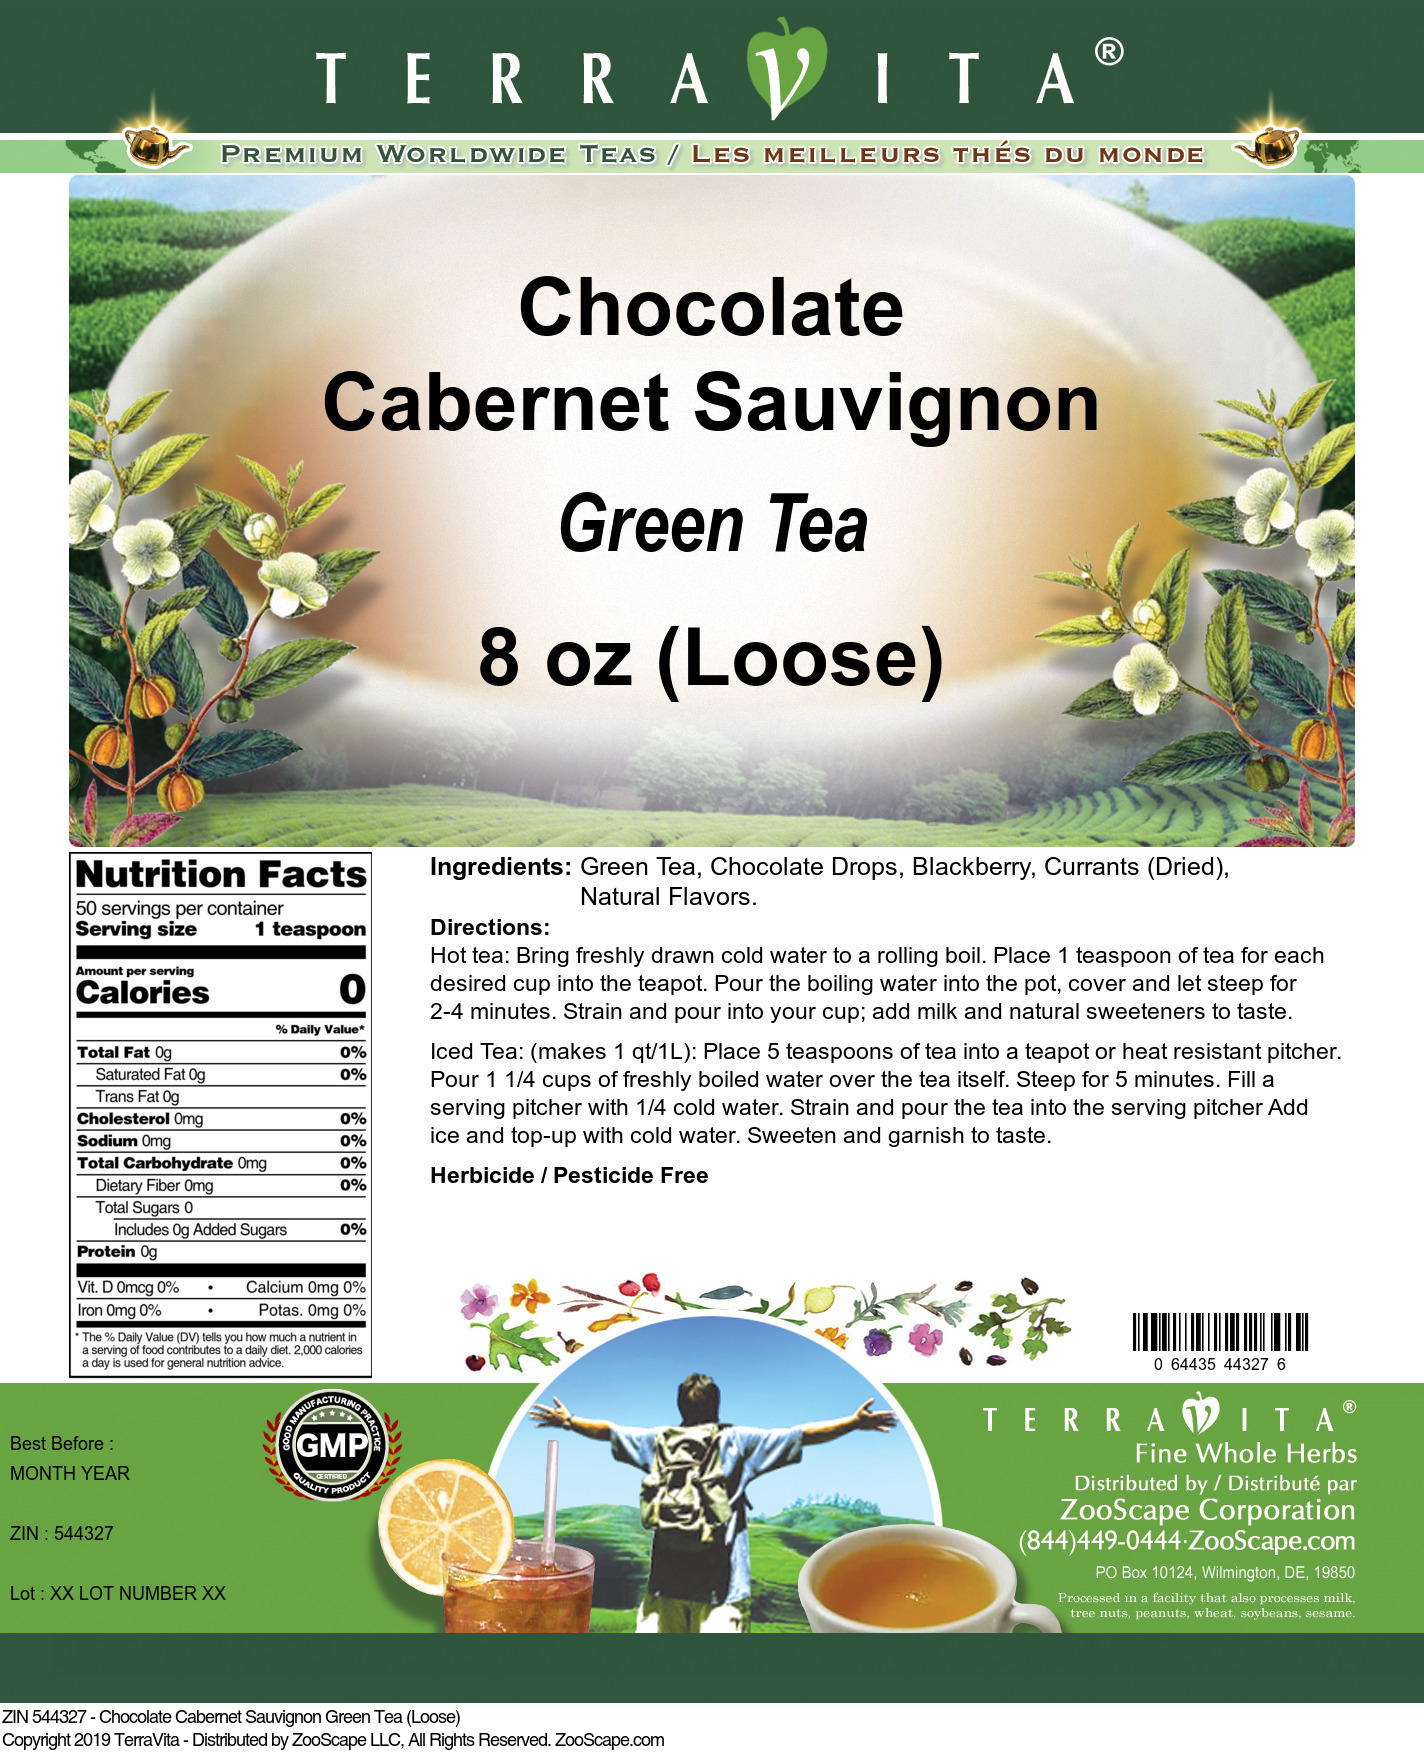 Chocolate Cabernet Sauvignon Green Tea (Loose) - Label